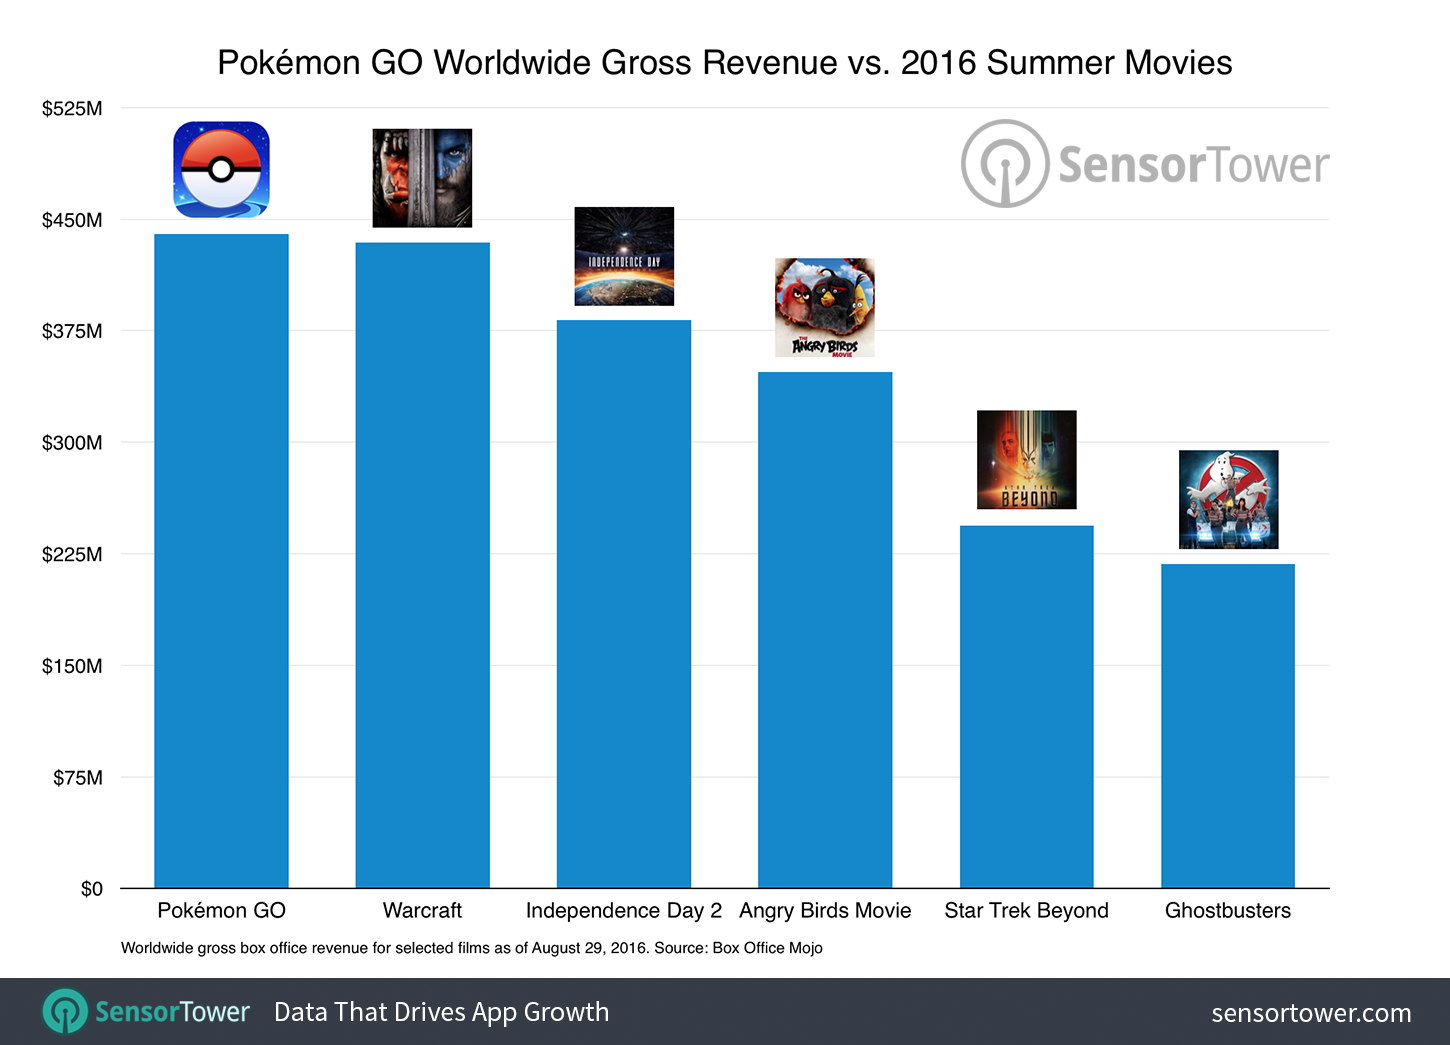 Pokemon GO Worldwide Gross Revenue Compared to 2016 Summer Movie Box Office Earnings